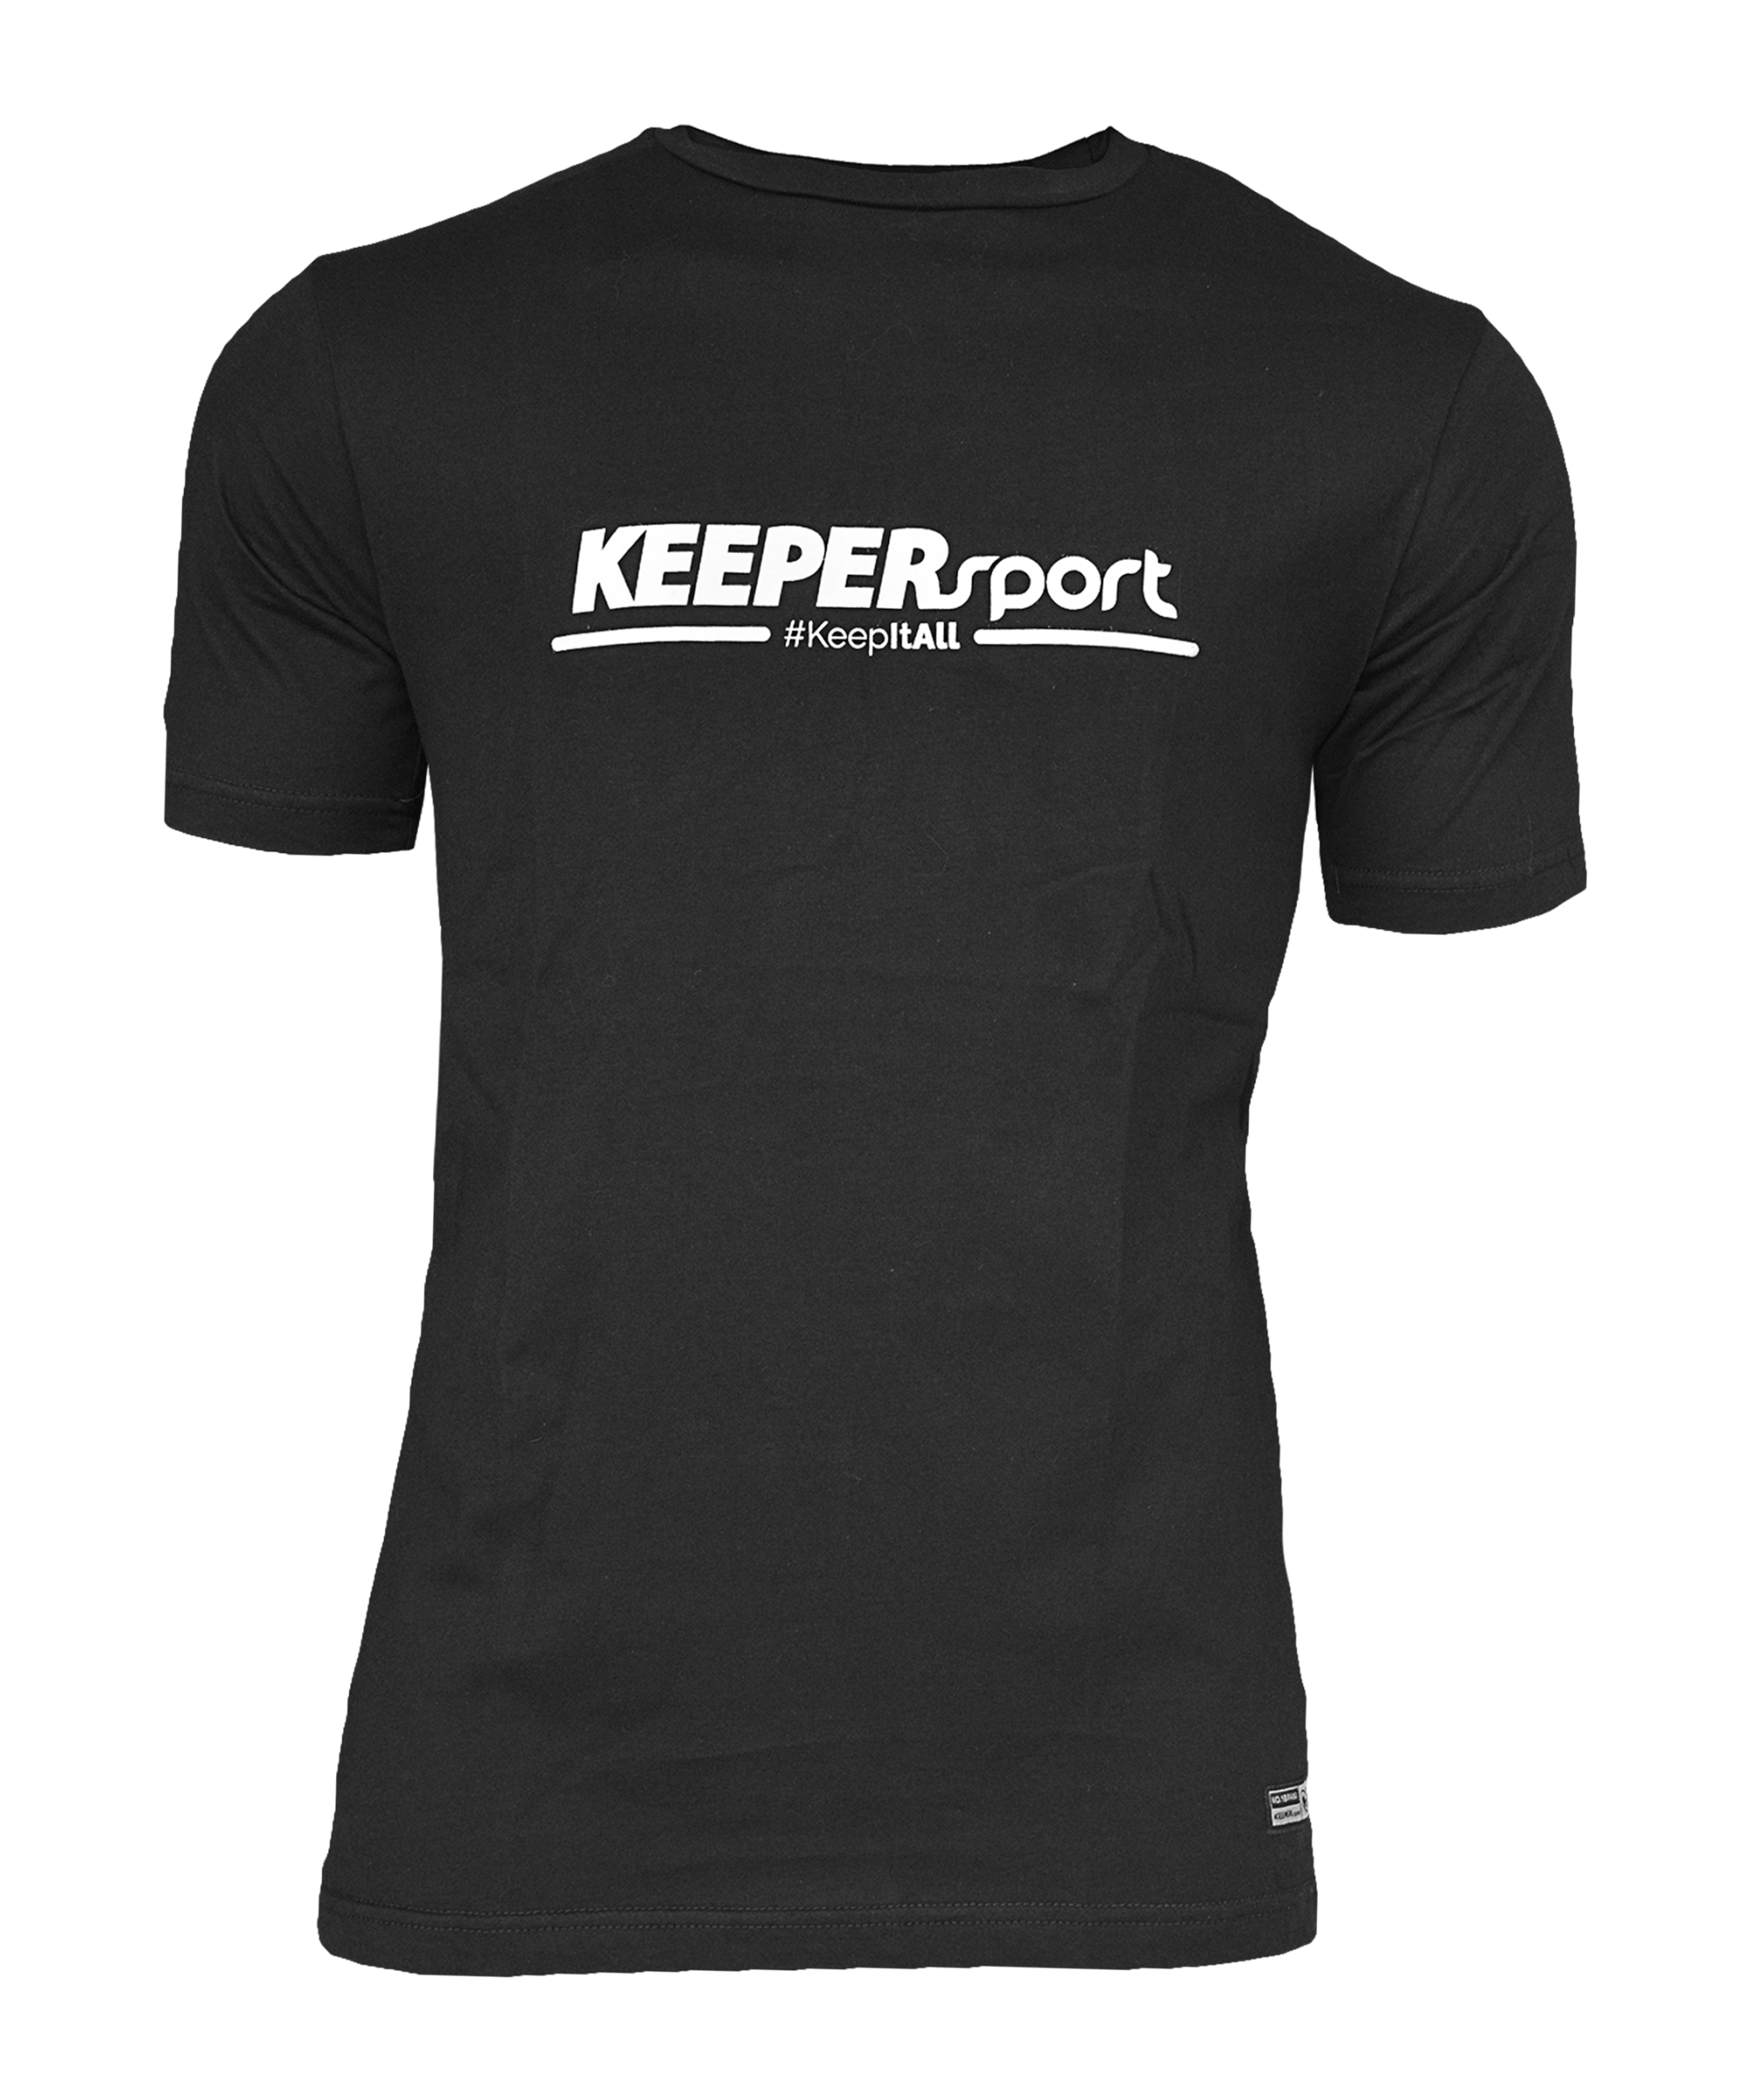 KEEPERsport T-Shirt black